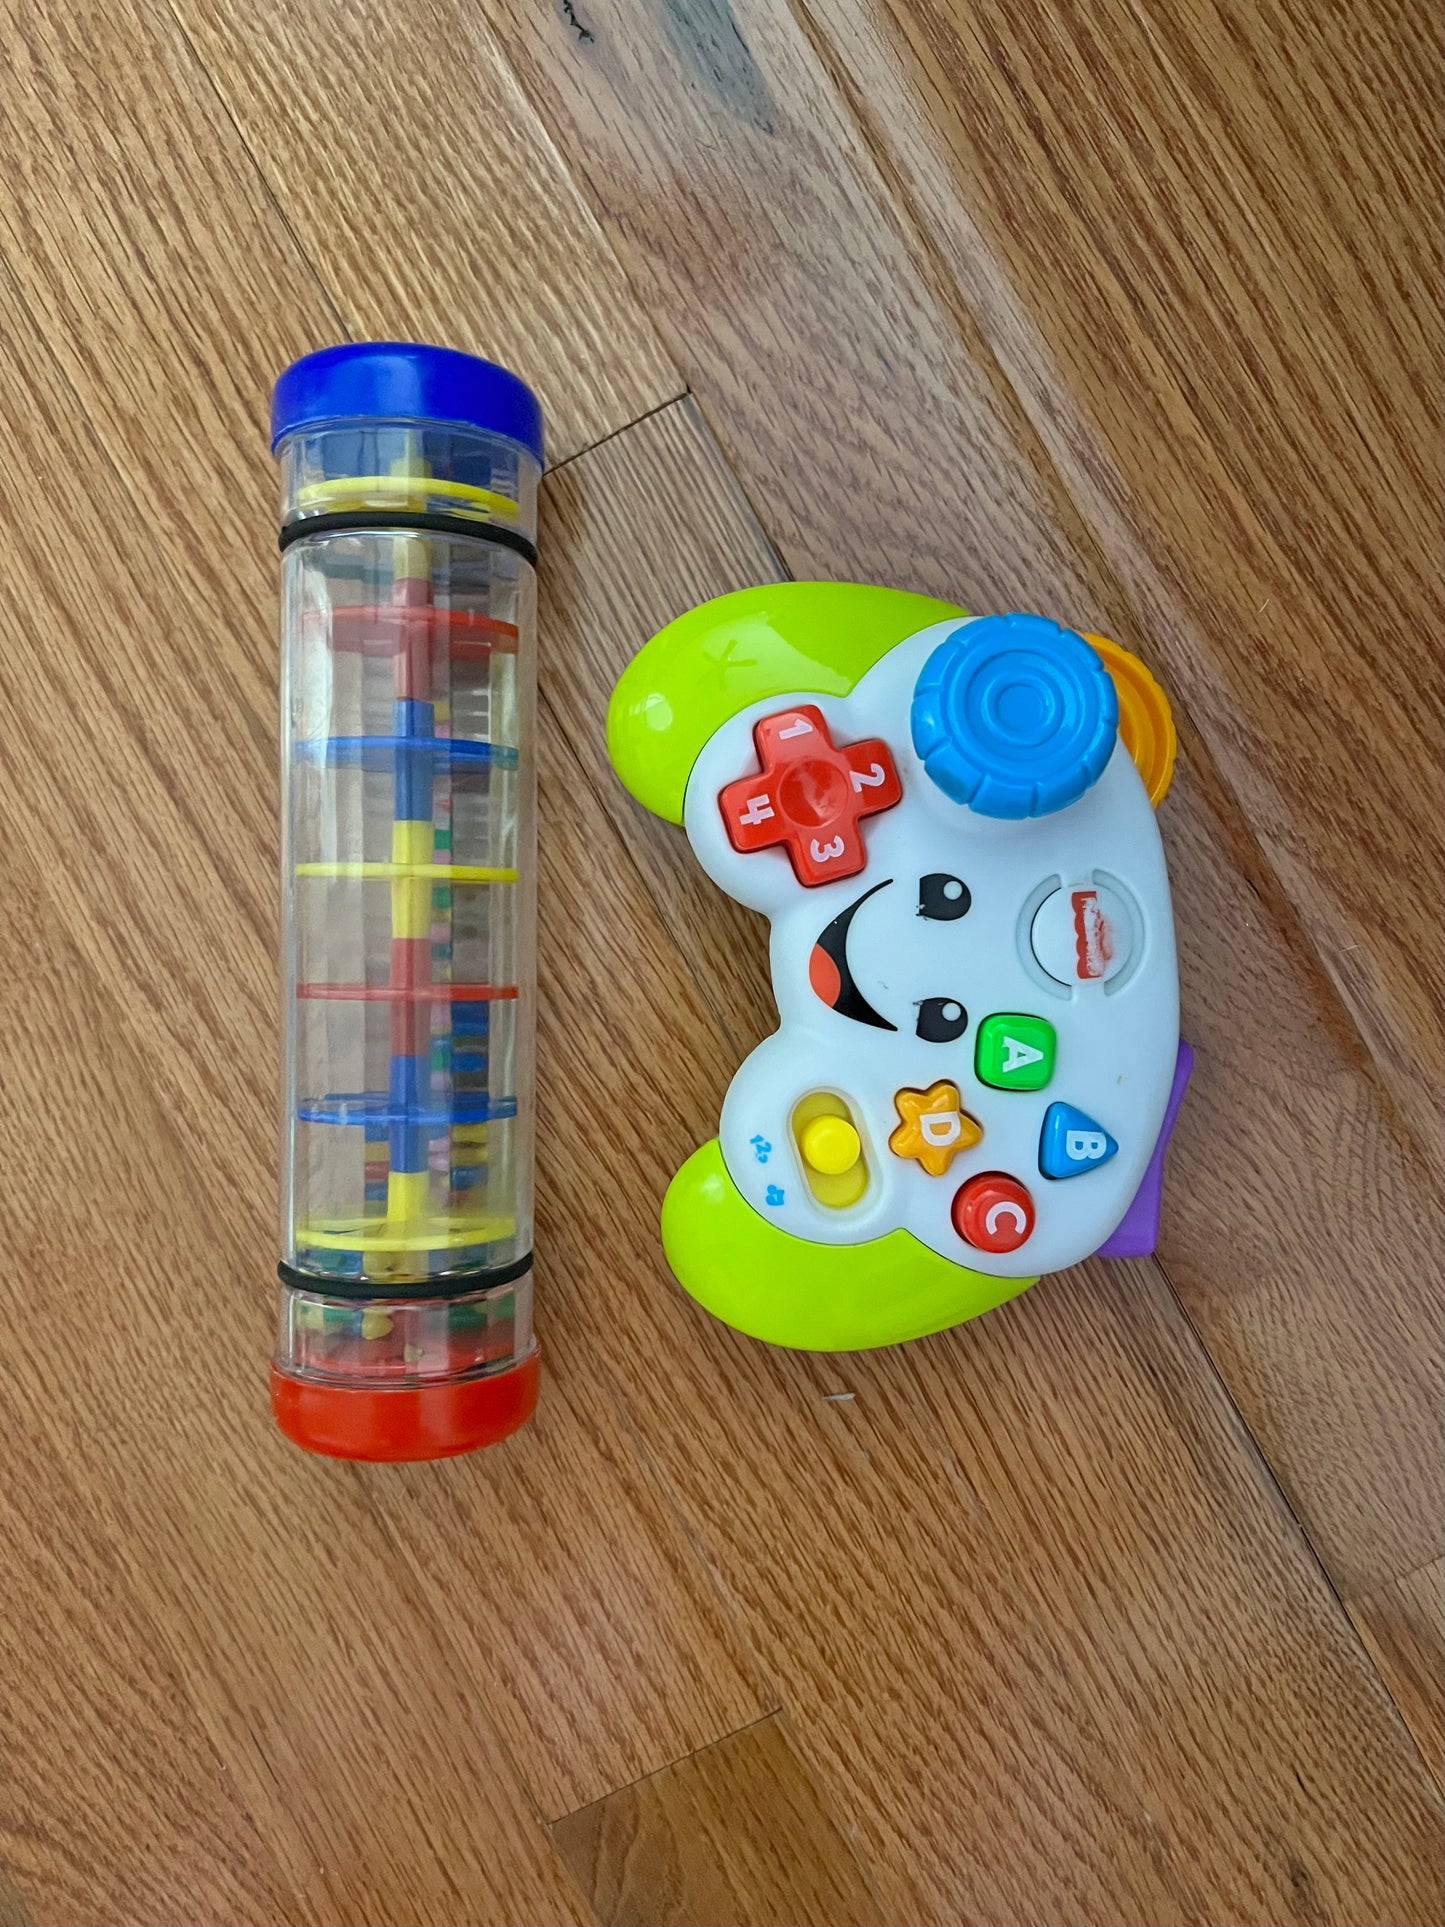 Sensory tube and controller bundle toys